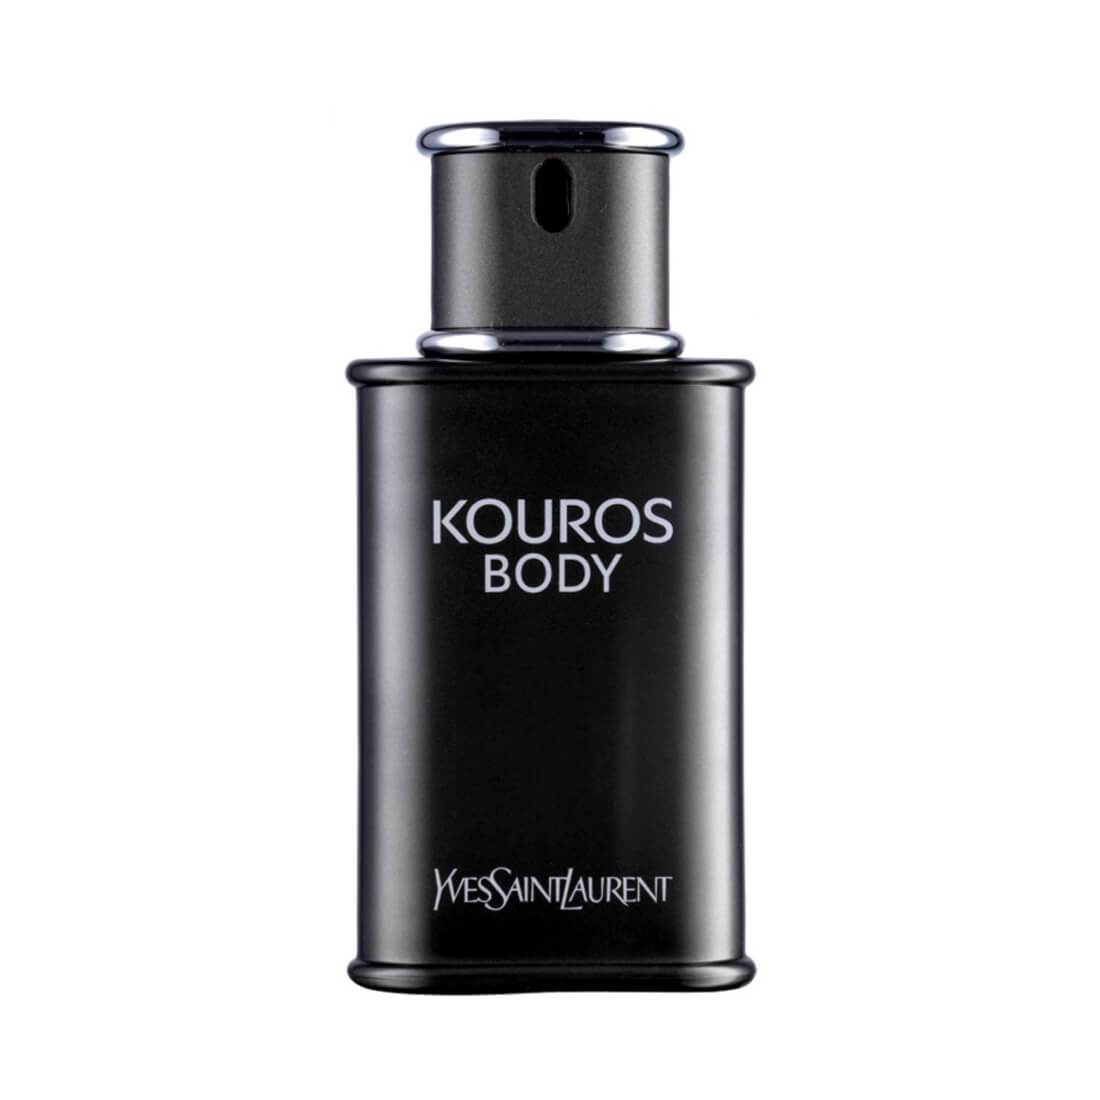 Yves Saint Laurent Kouros Body EDT Perfume - 100ml